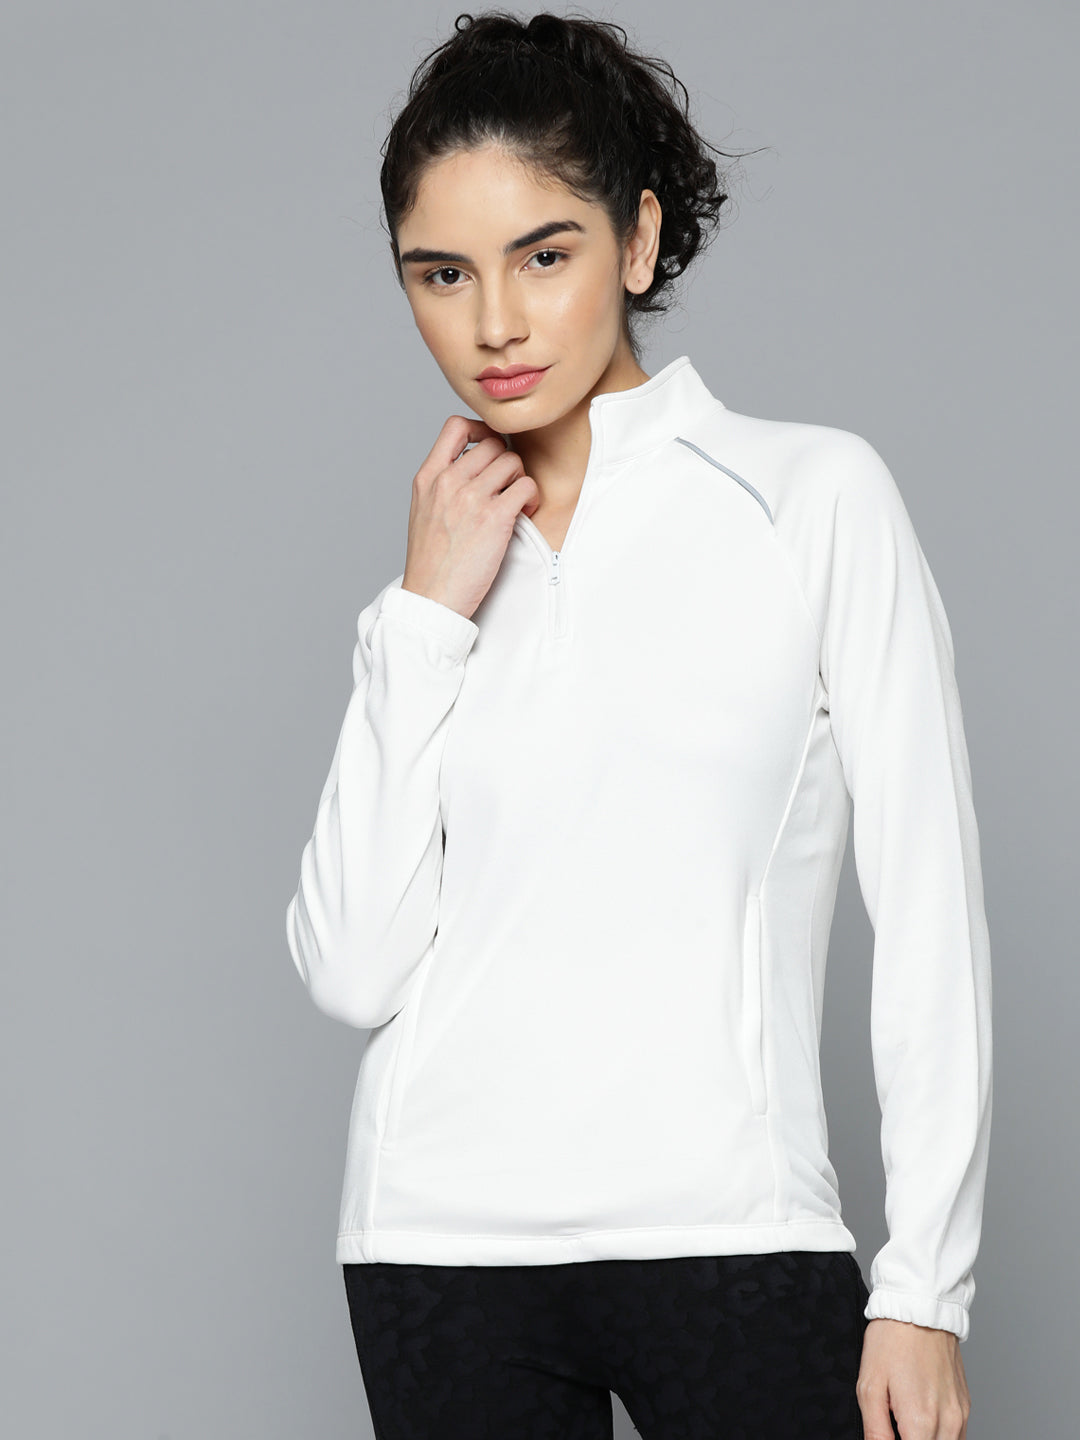 Alcis Women White Solid Sweatshirt